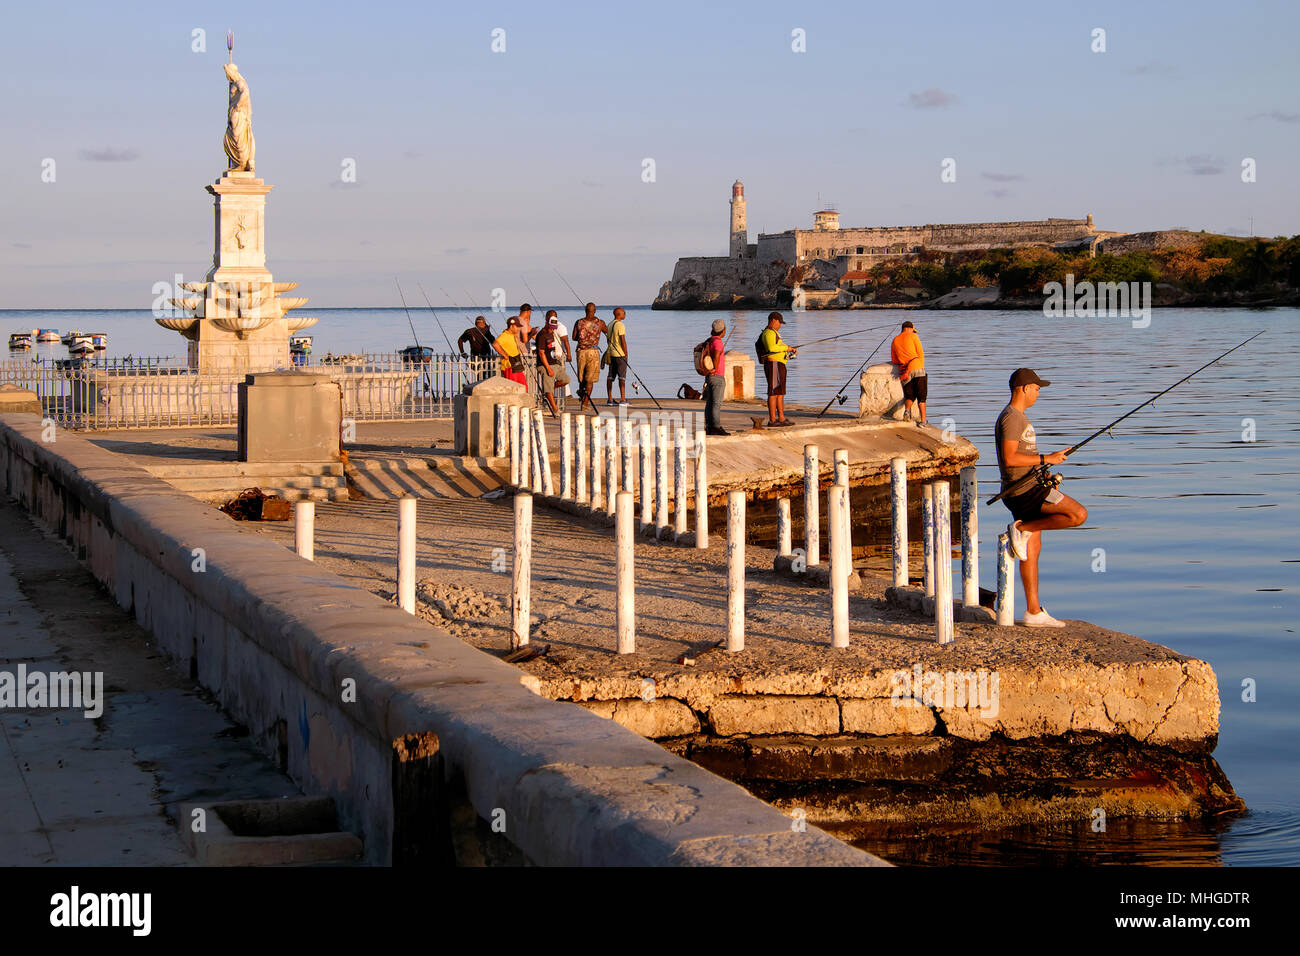 La pesca accanto a una fontana di Nettuno con Castillo de los Tres Reyes del Morro castle in background, Malecon / Avenida del Puerto, Havana, Cuba Foto Stock